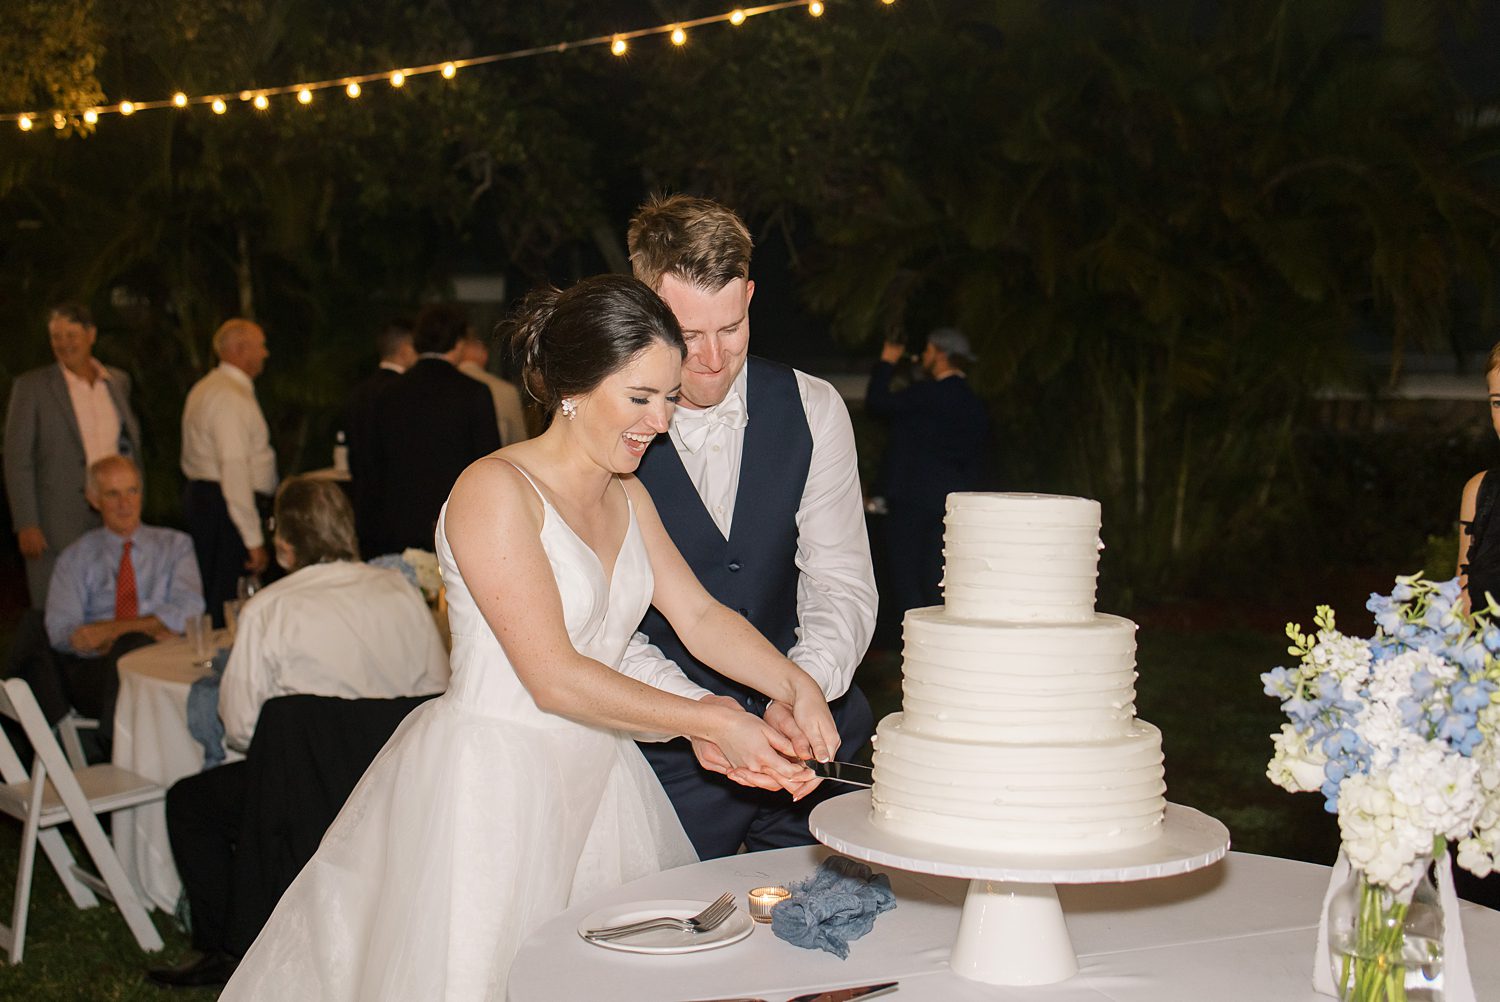 newlyweds cut wedding cake during open air reception at Innisbrook Resort